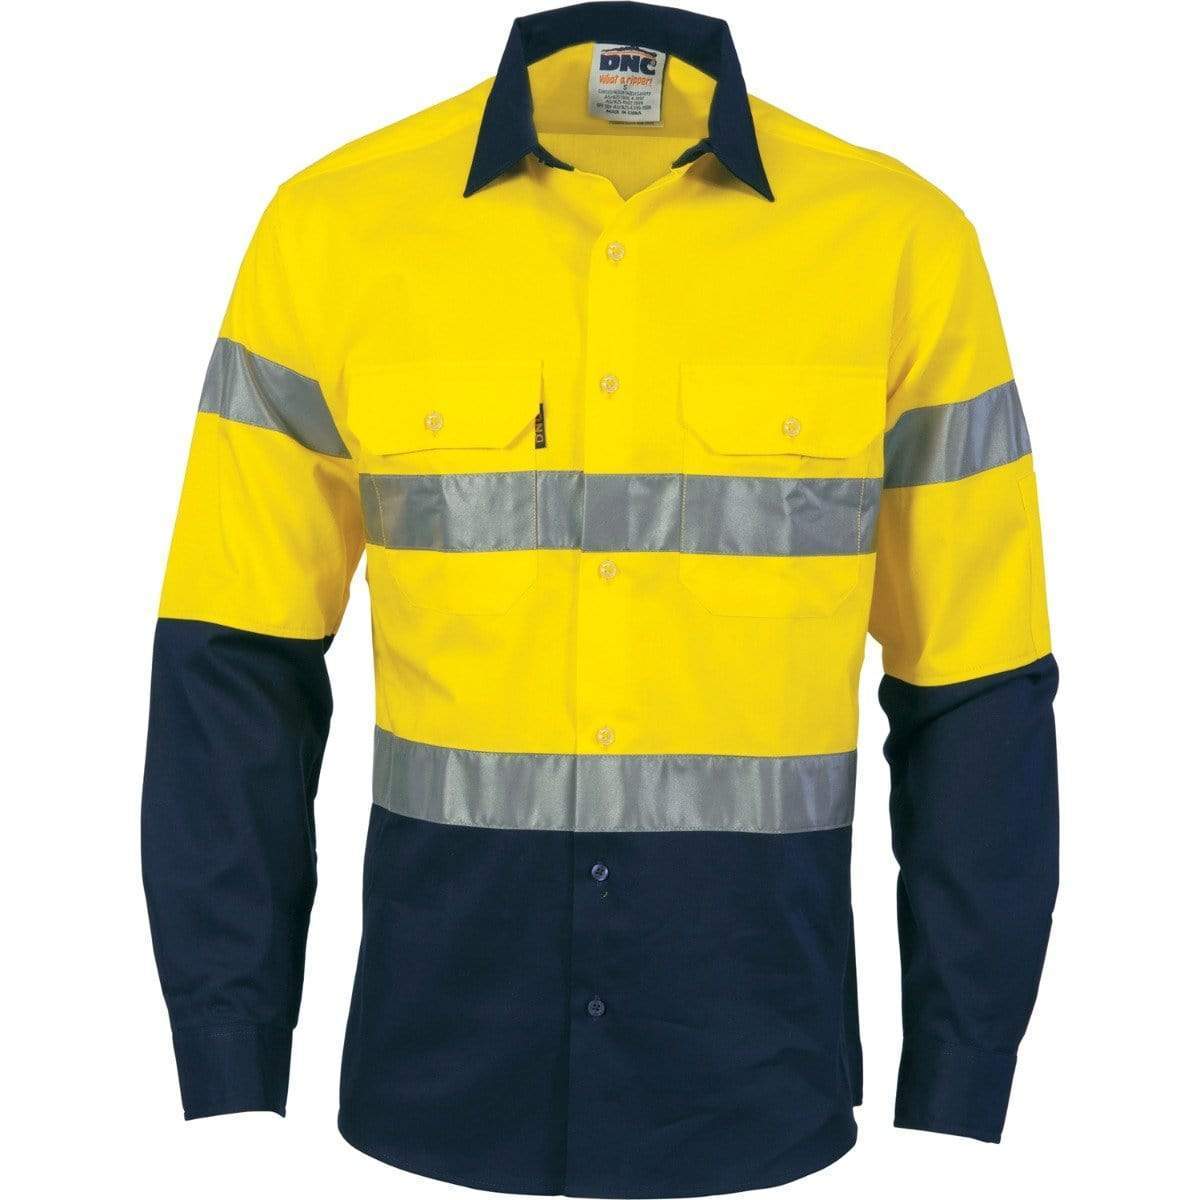 Dnc Workwear Hi-vis Cool-breeze Long Sleeve Cotton Shirt With Generic Reflective Tape - 3966 Work Wear DNC Workwear Yellow/Navy XS 